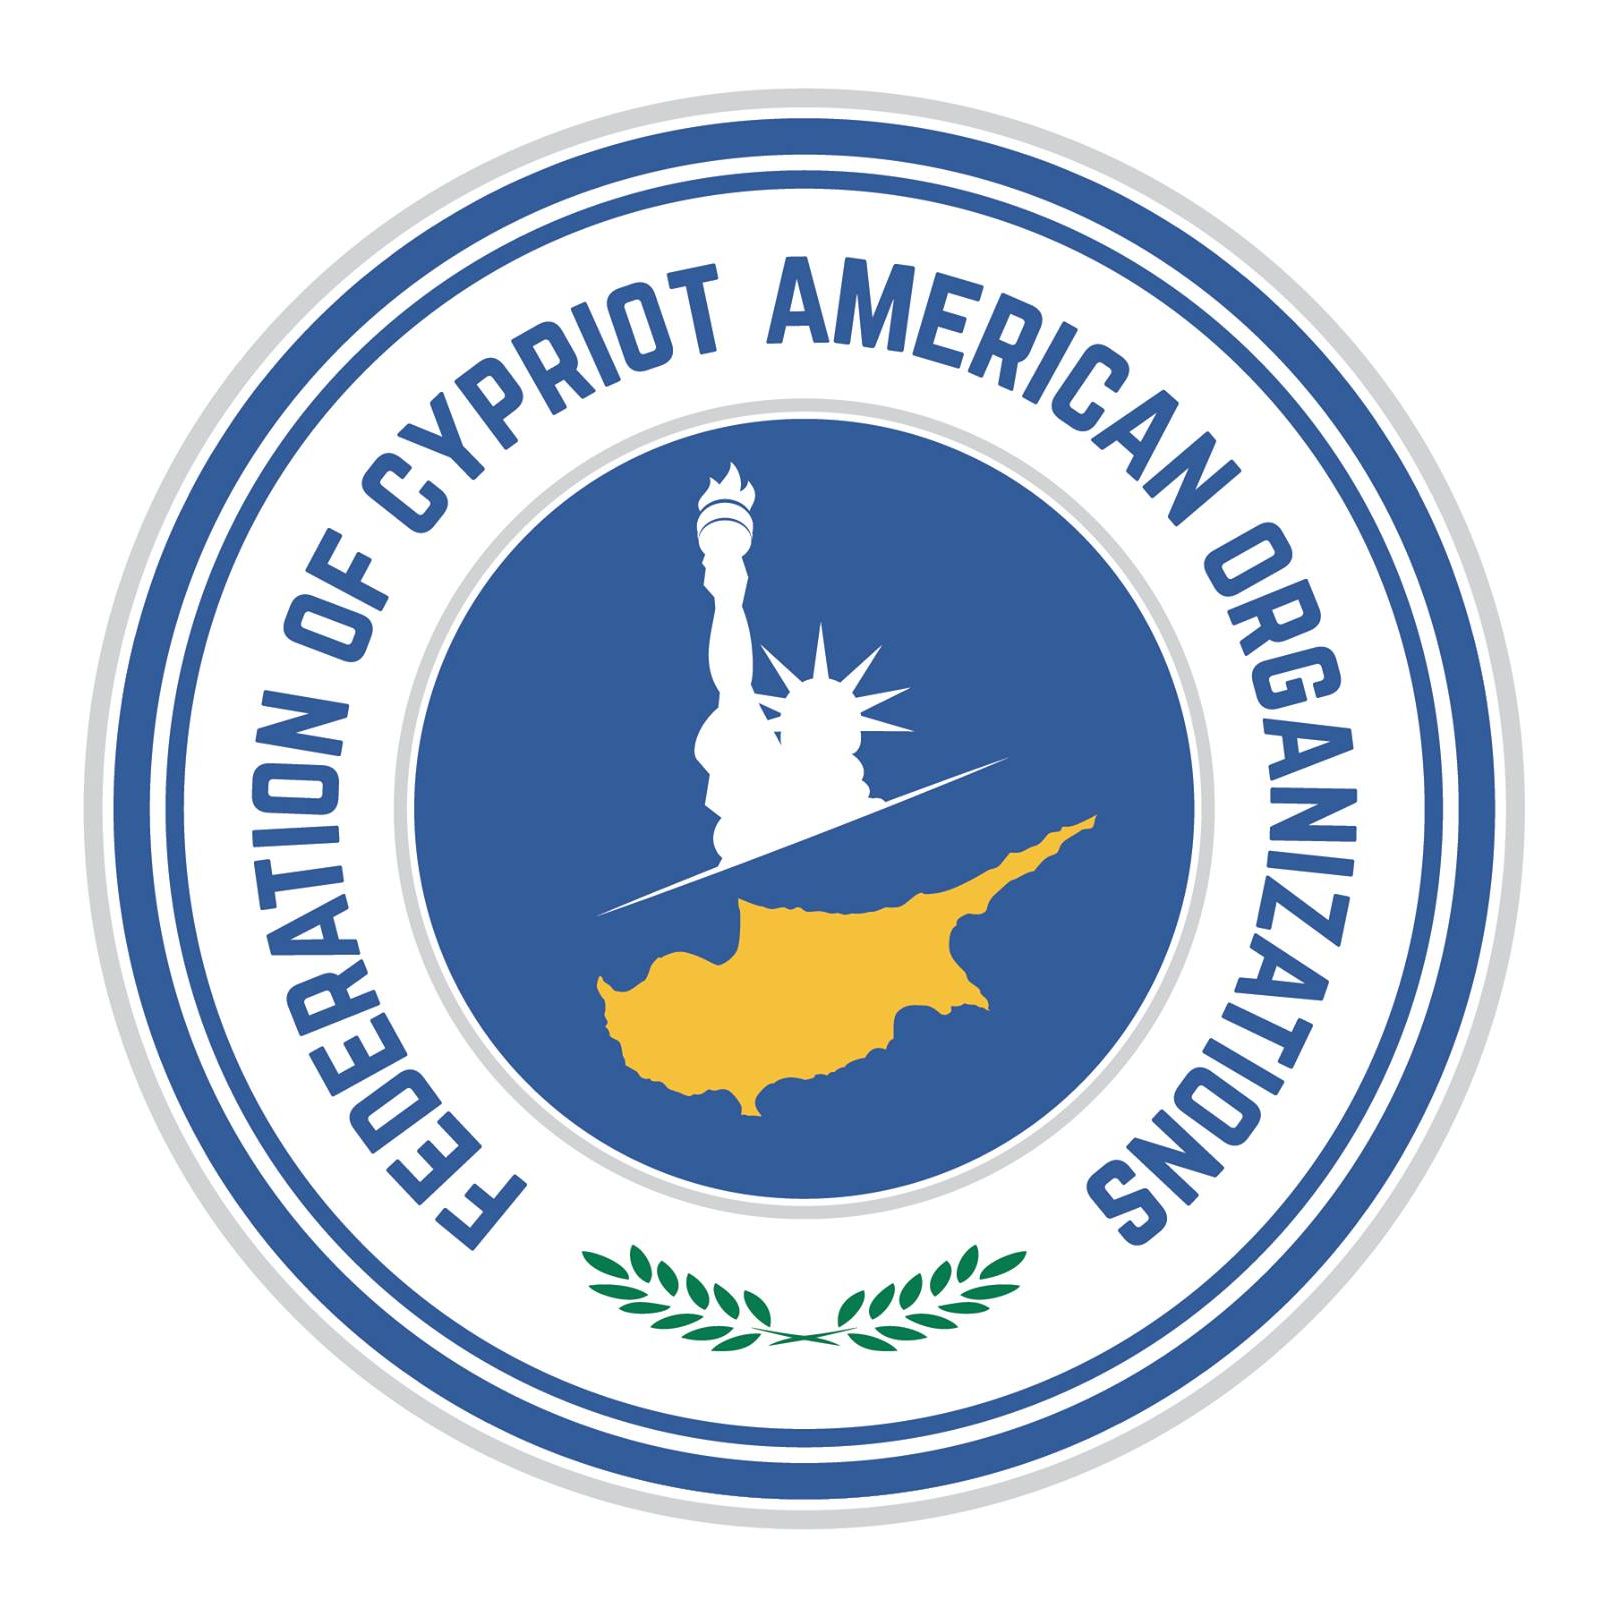 Greek Cultural Organizations in New York - Federation of Cypriot American Organizations